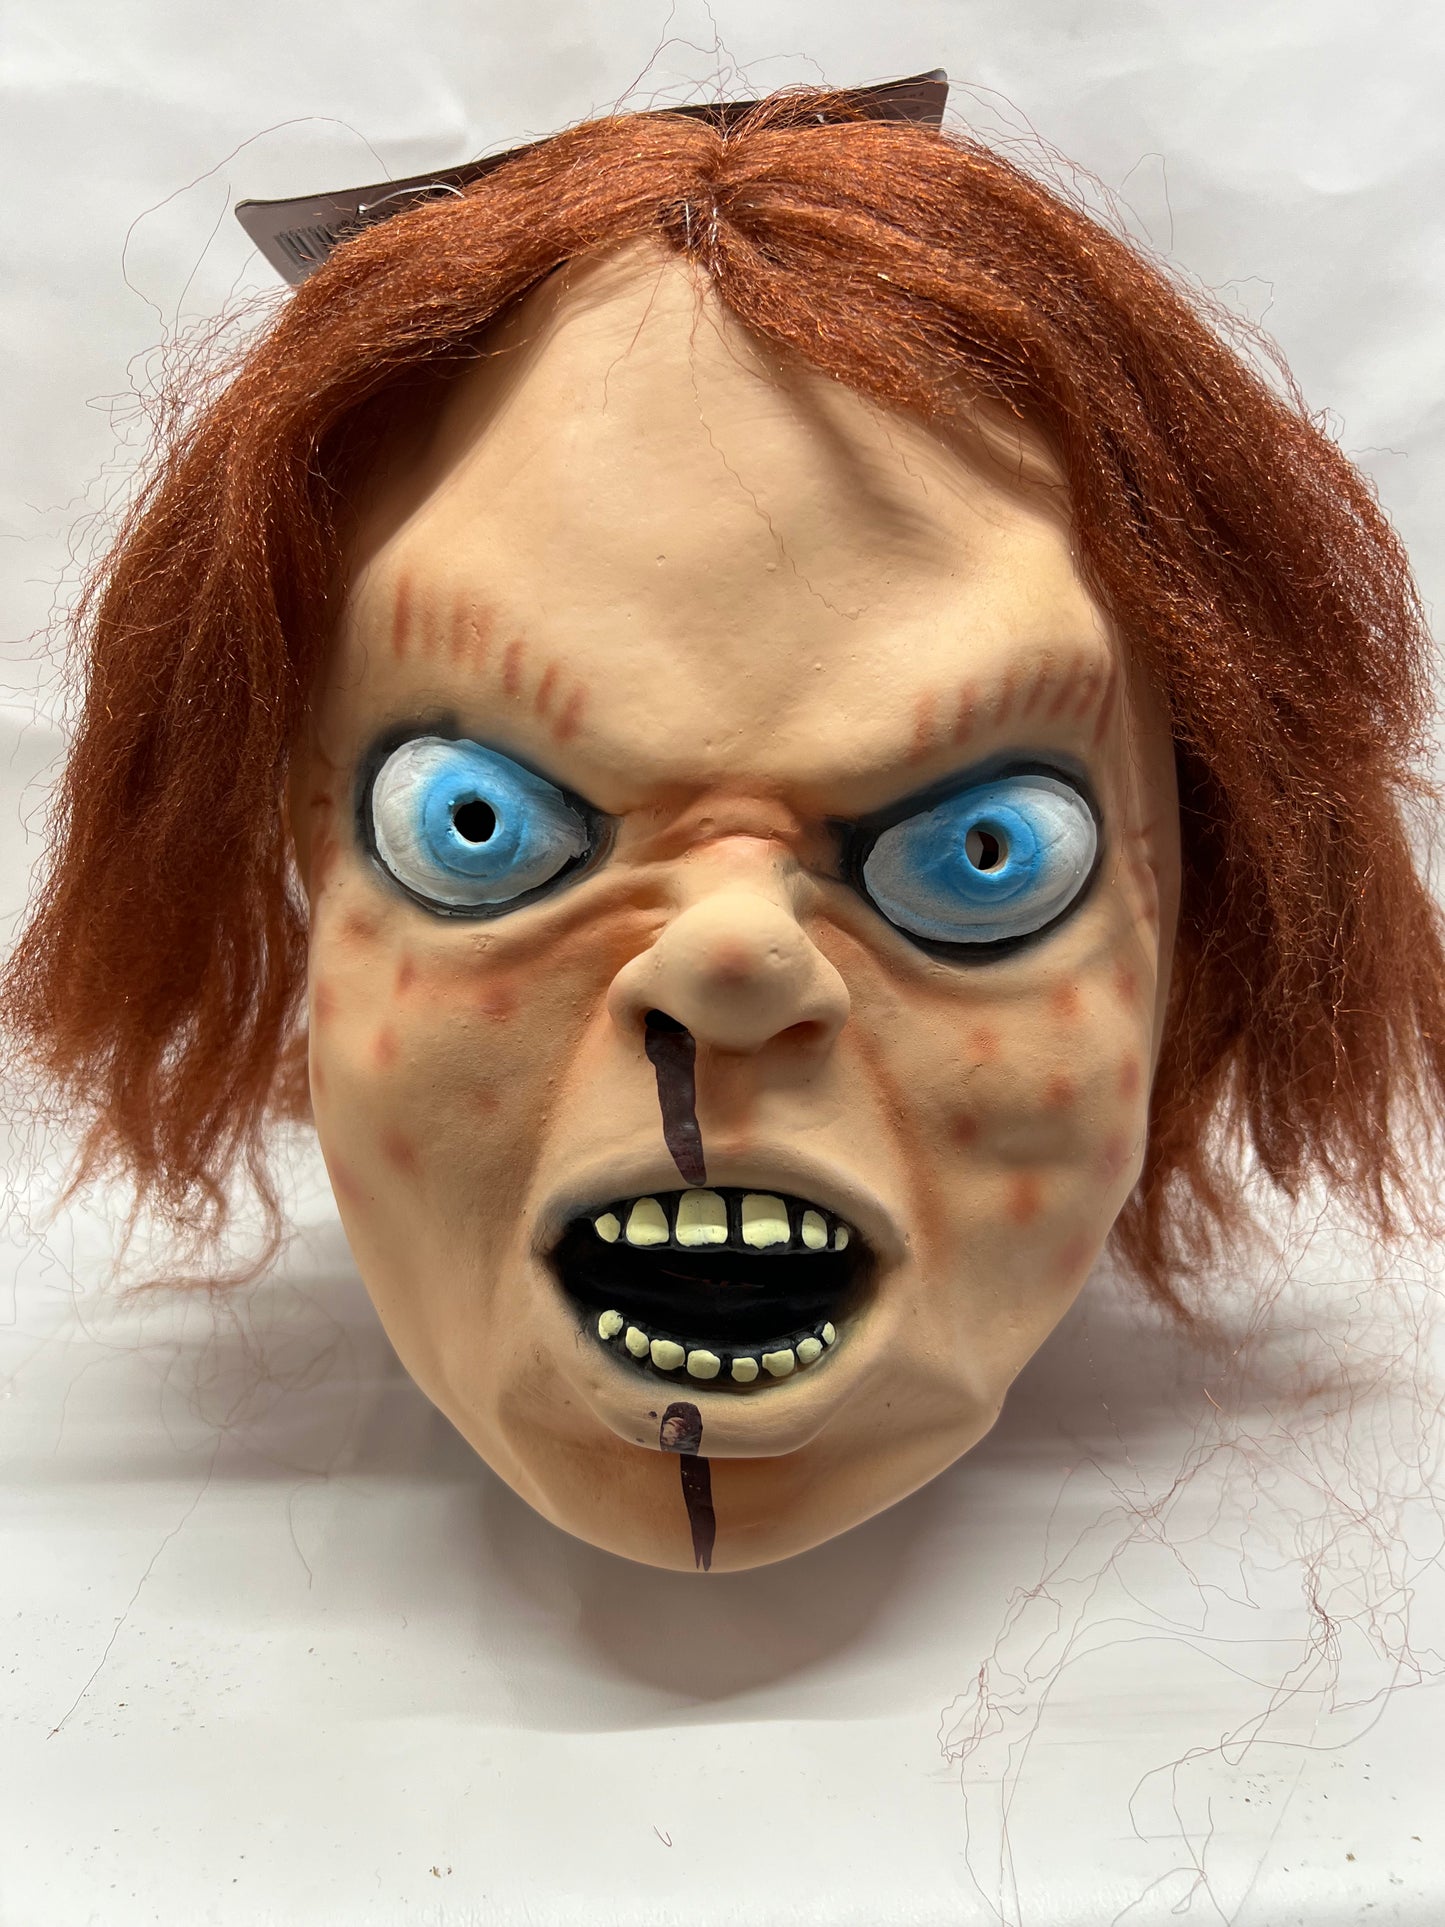 Masque Chucky avec cheveux - Masque Child's Play 2 sous licence officielle